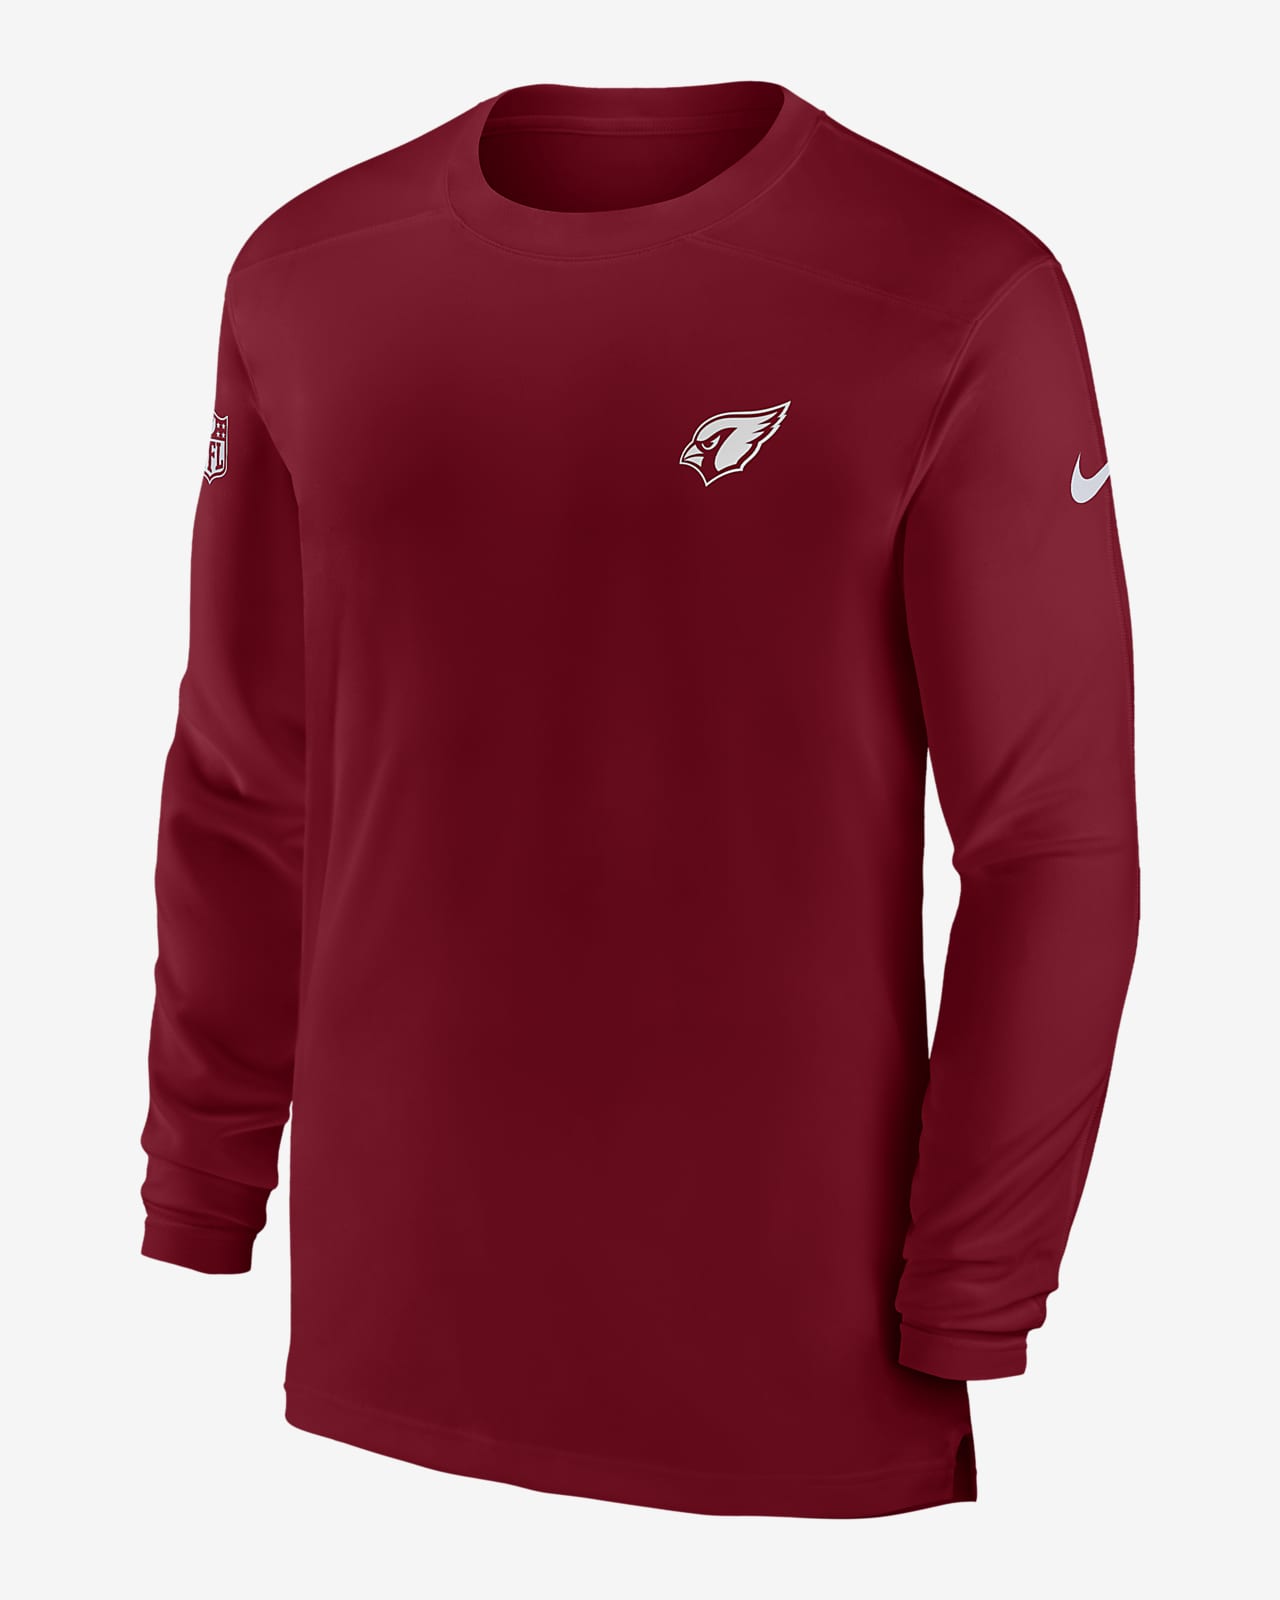 Nike Men's Arizona Cardinals Performance Hooded Long Sleeve T-Shirt - Black - XL Each